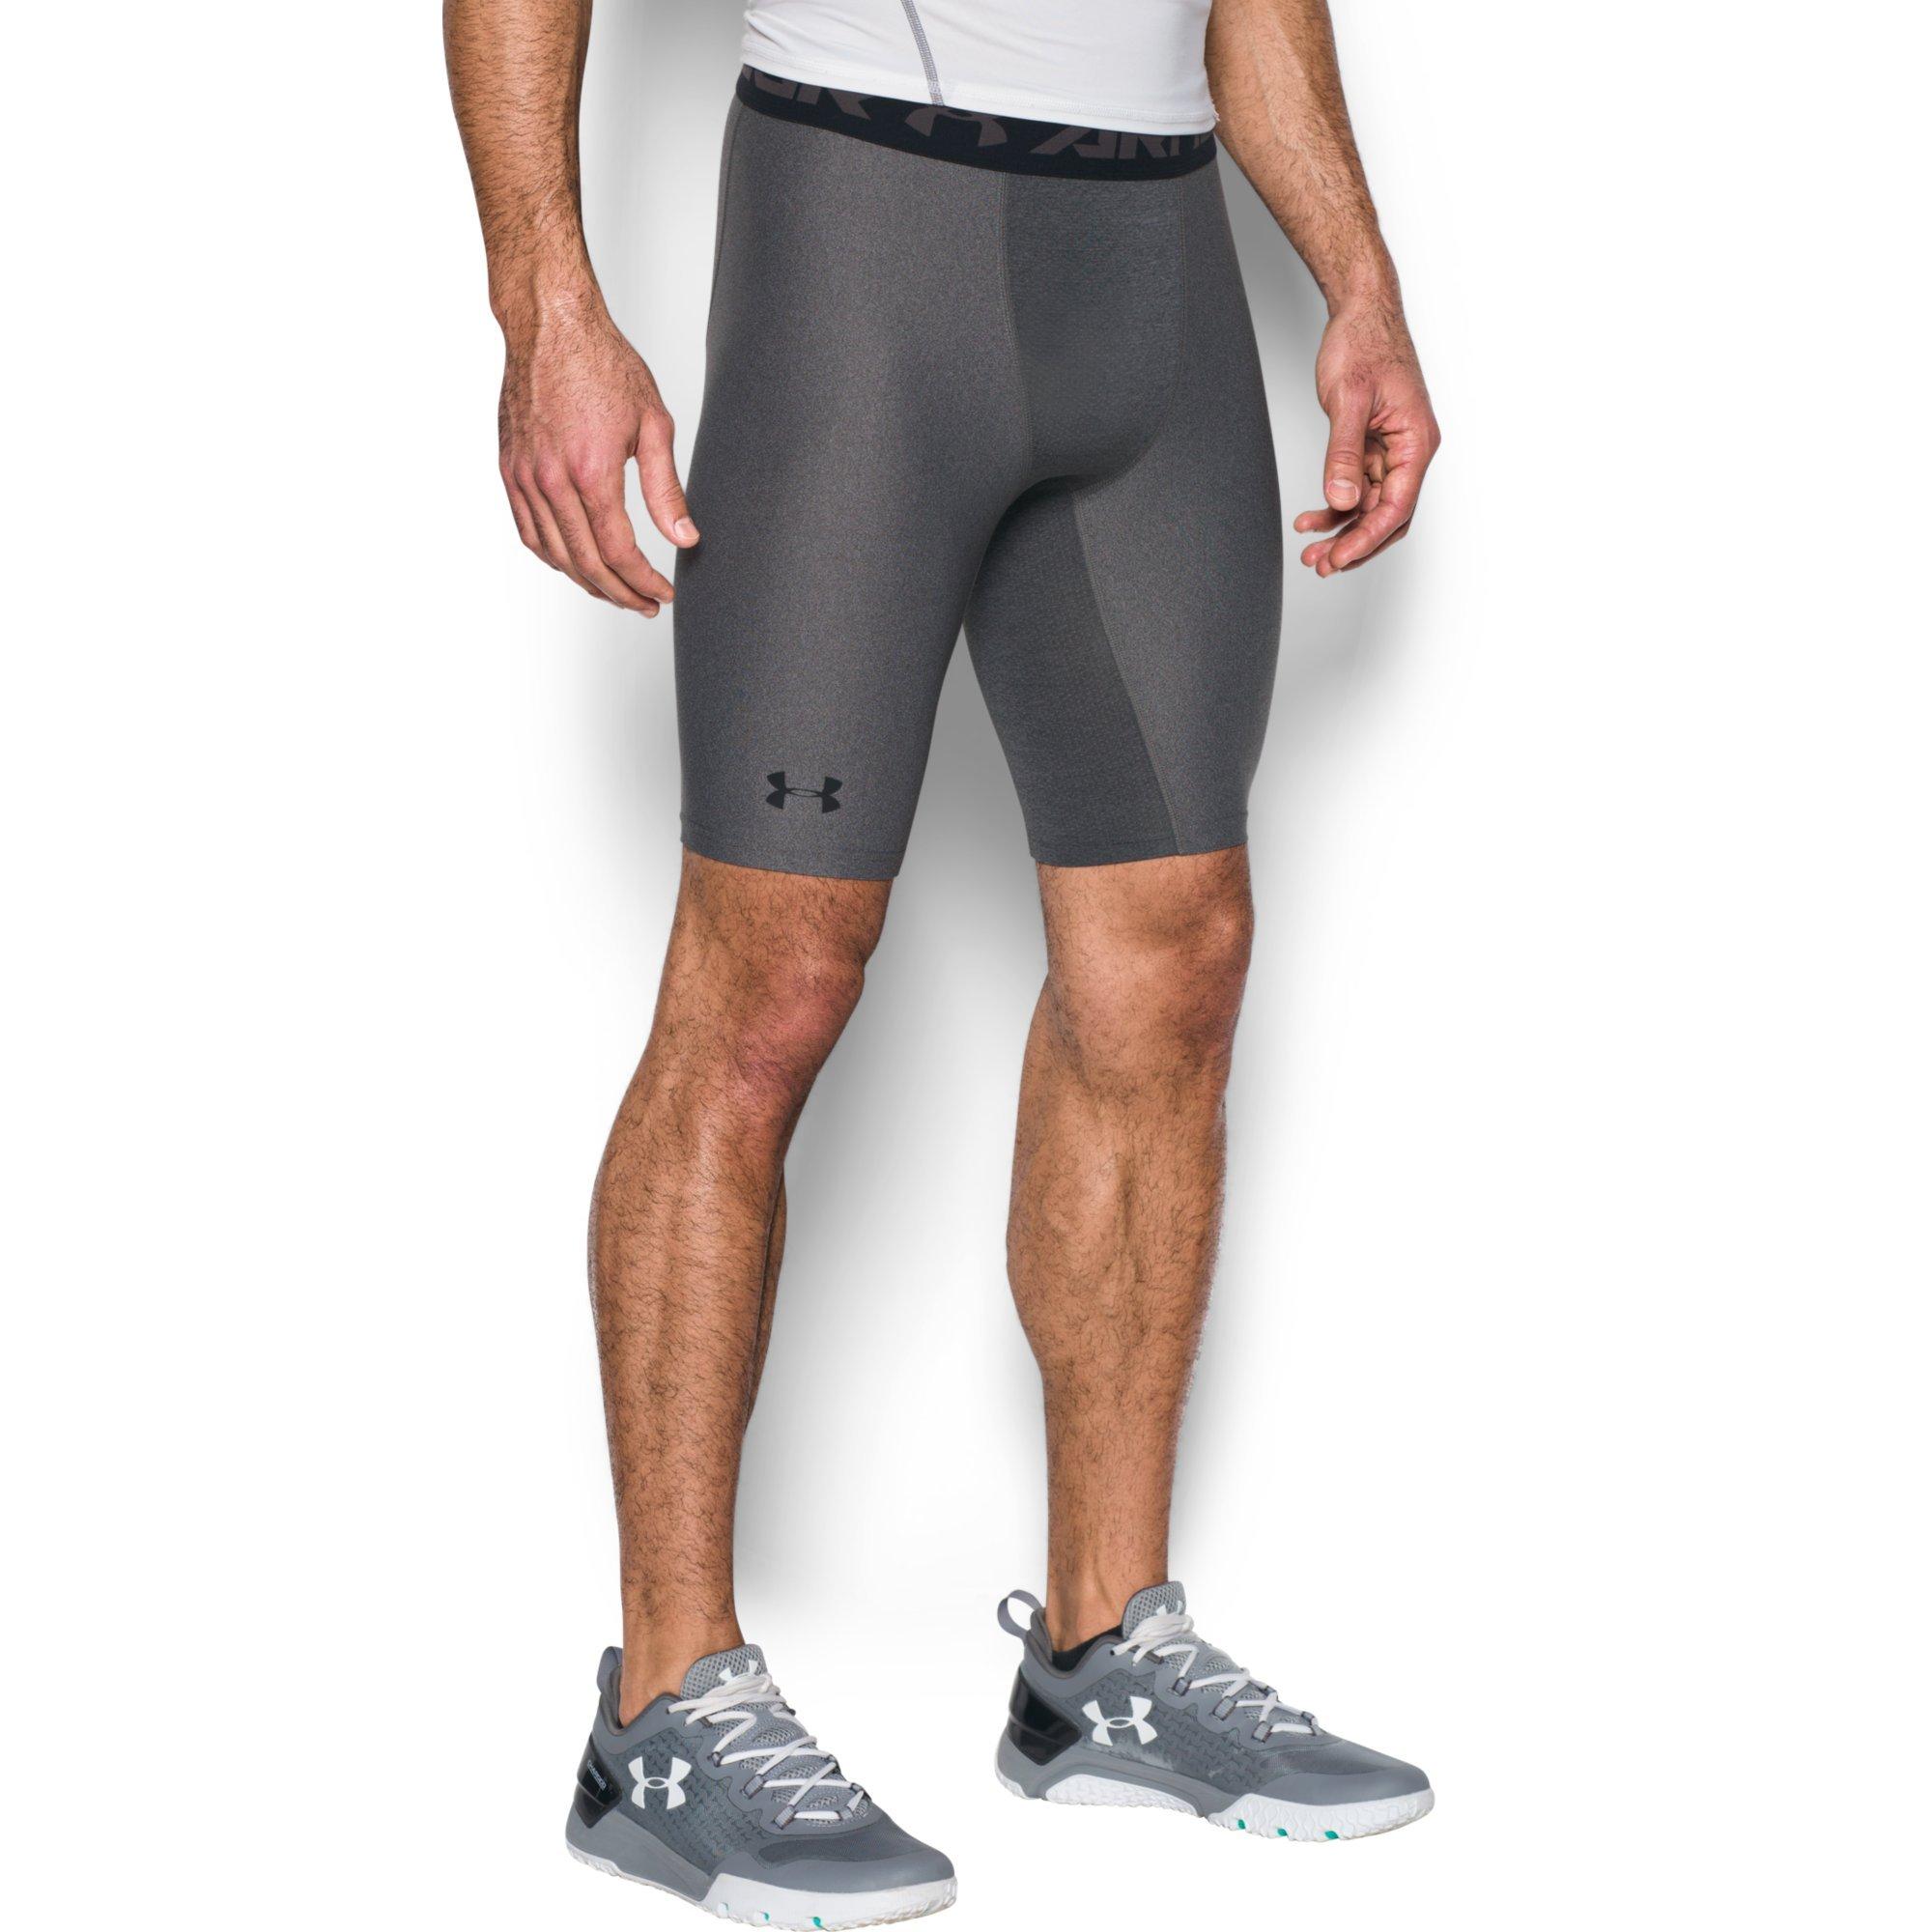 hibbett sports compression pants